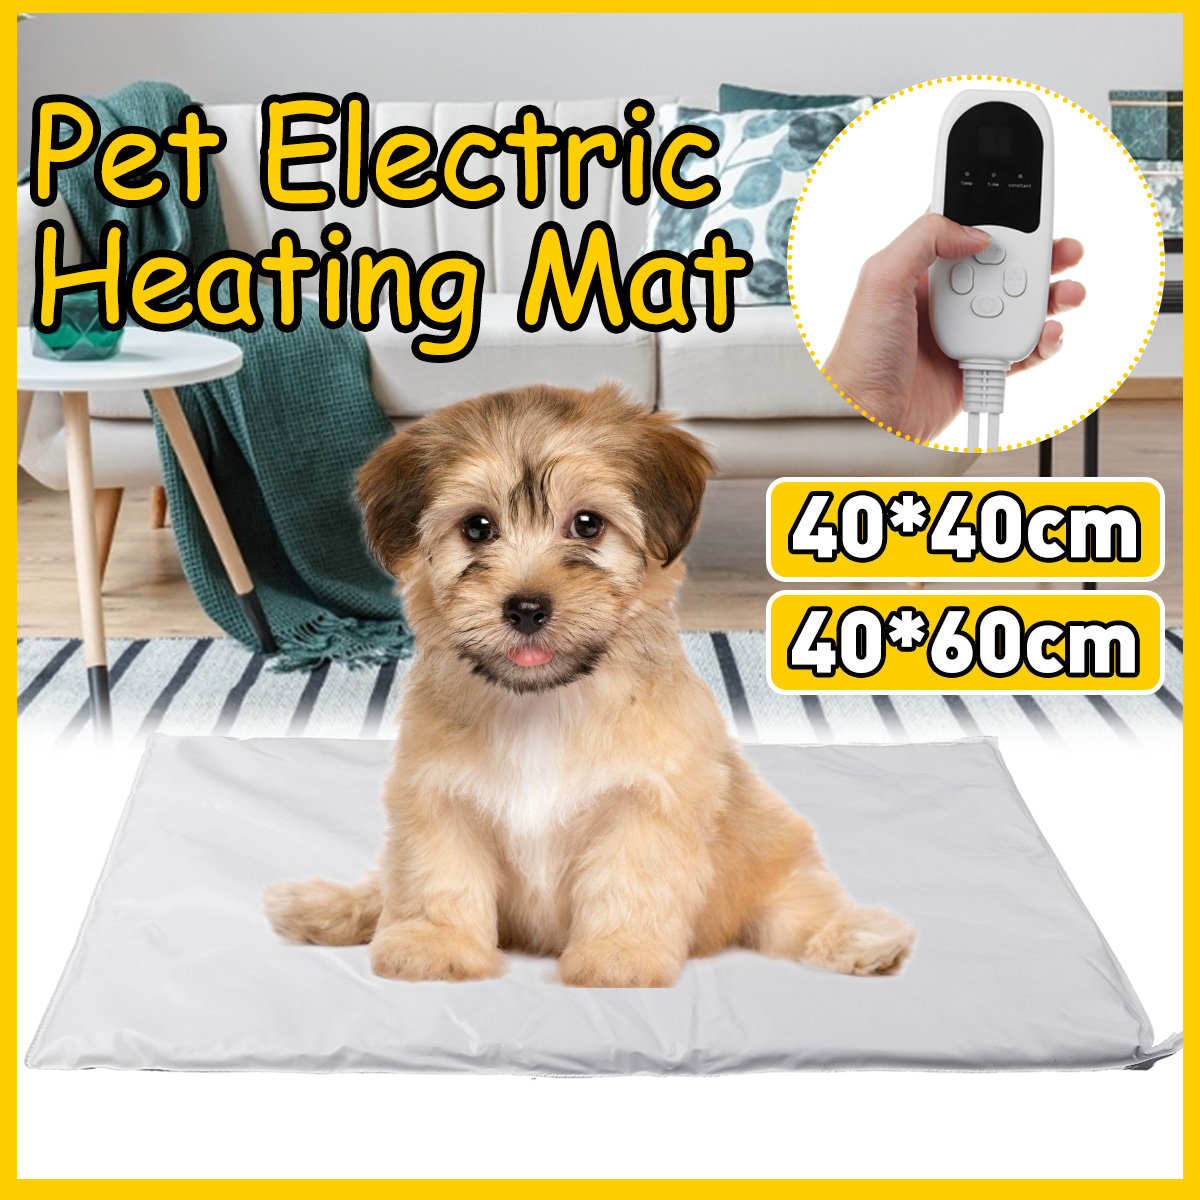 Electric-Pet-Heat-Mat-Heated-Heating-Pad-Blanket-Dog-Cat-Waterproof-1914356-2